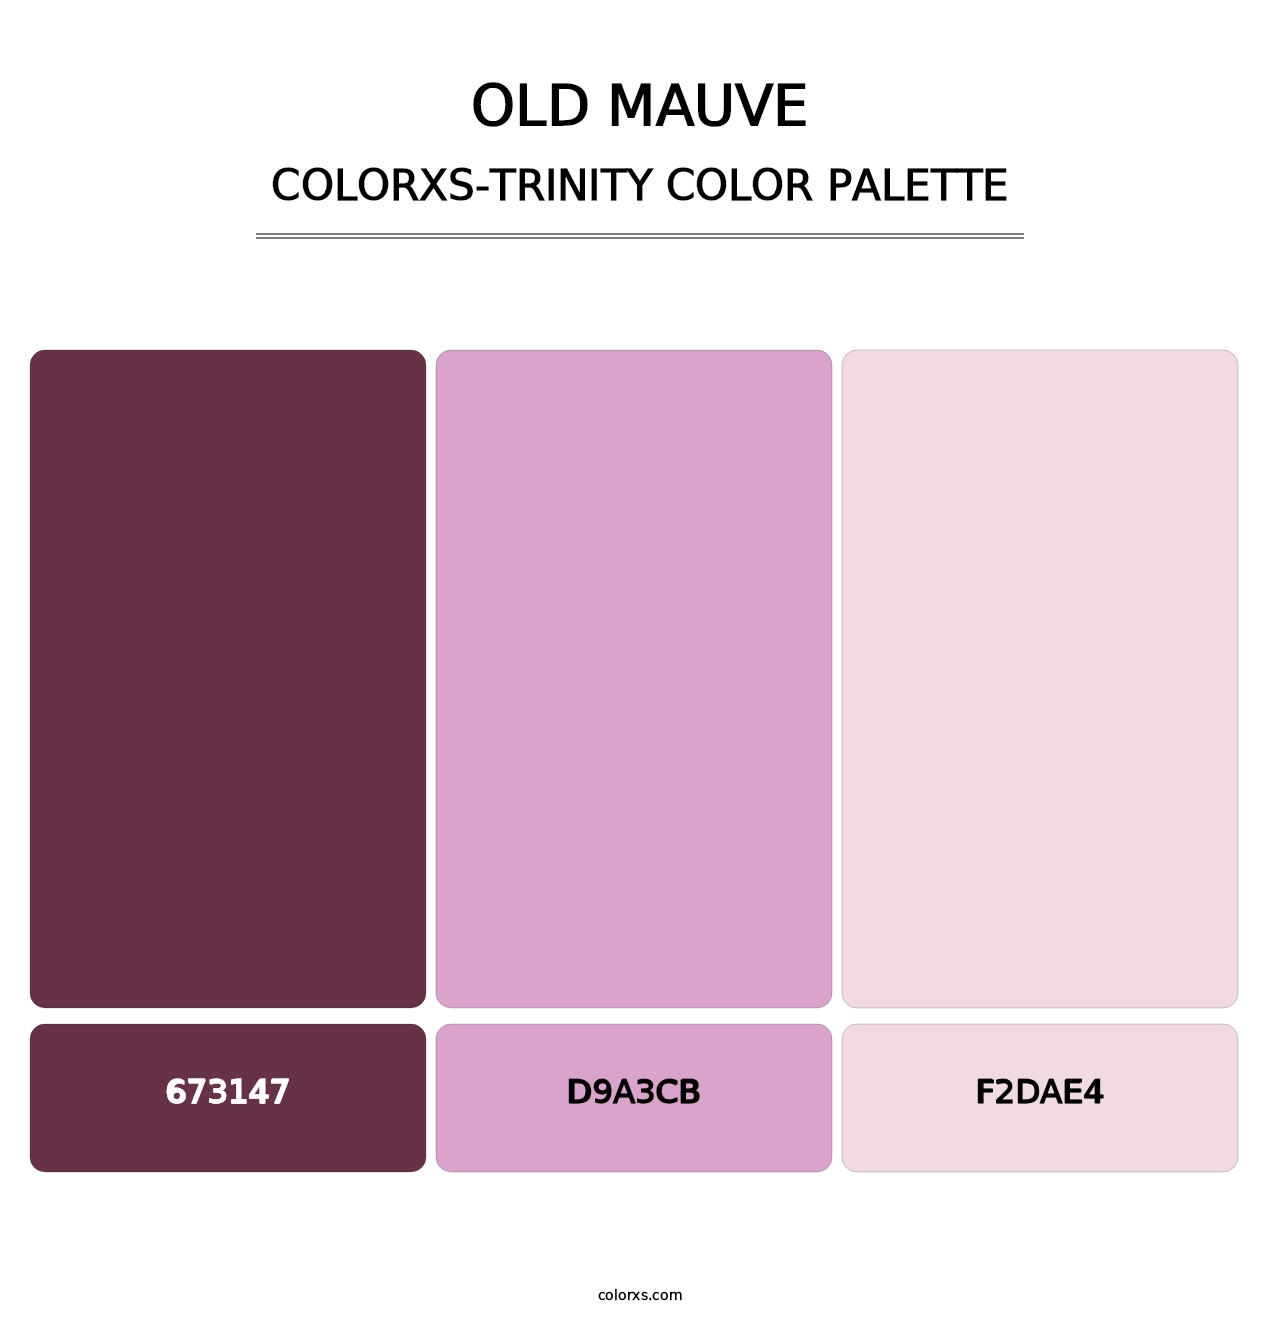 Old Mauve - Colorxs Trinity Palette